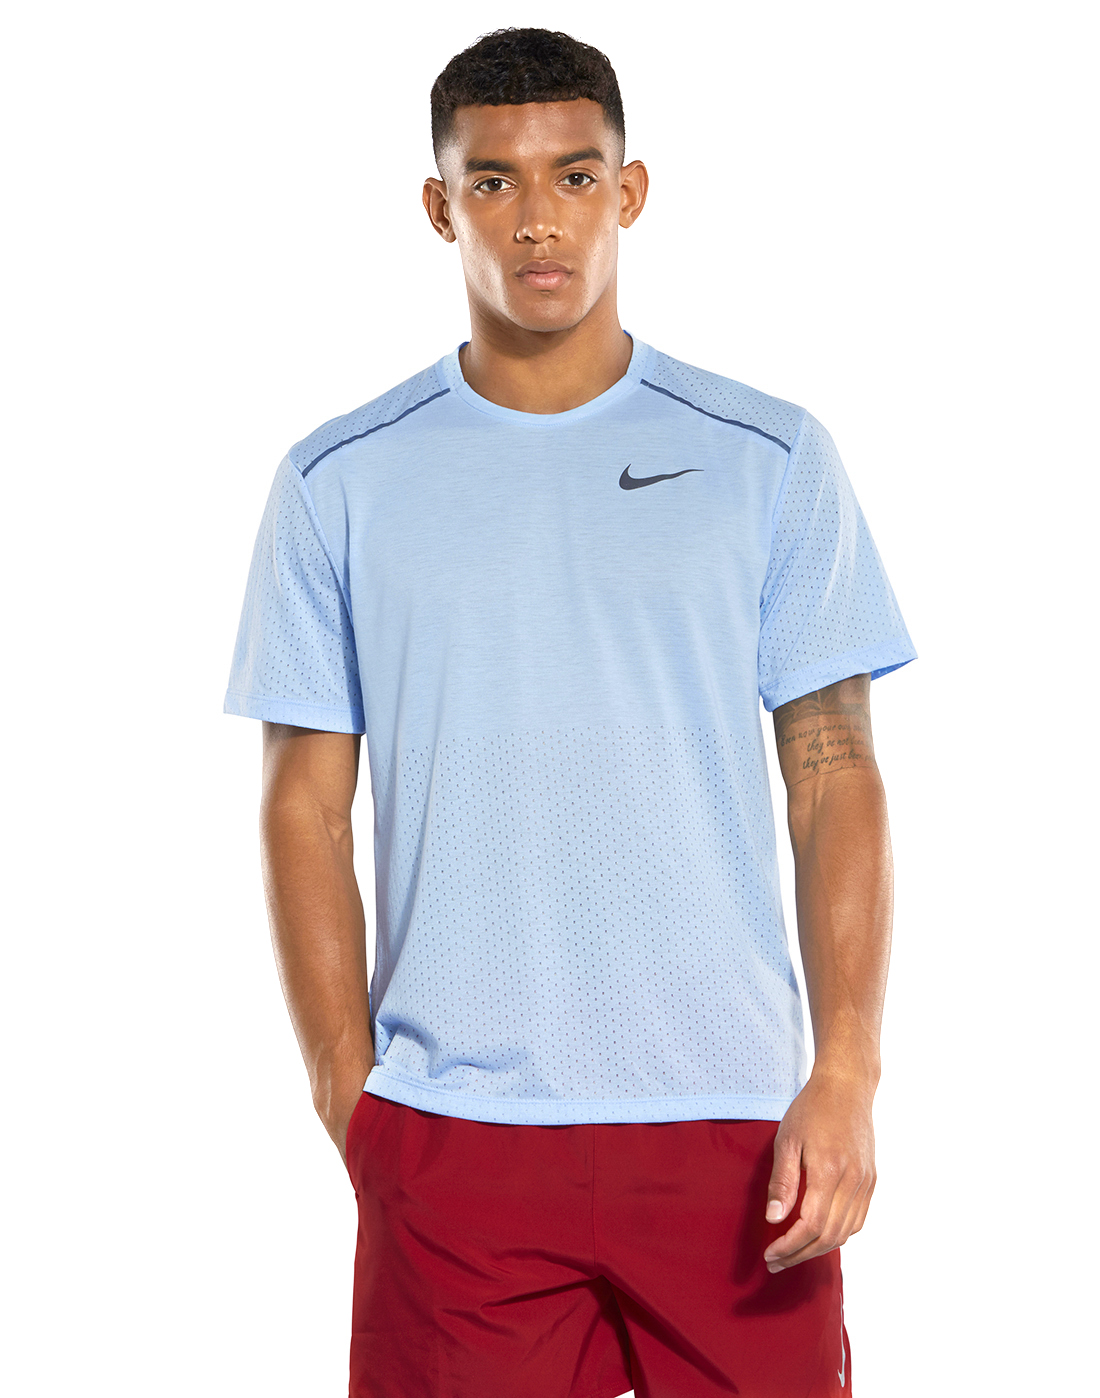 Men's Light Blue Nike Running T-Shirt | Life Style Sports